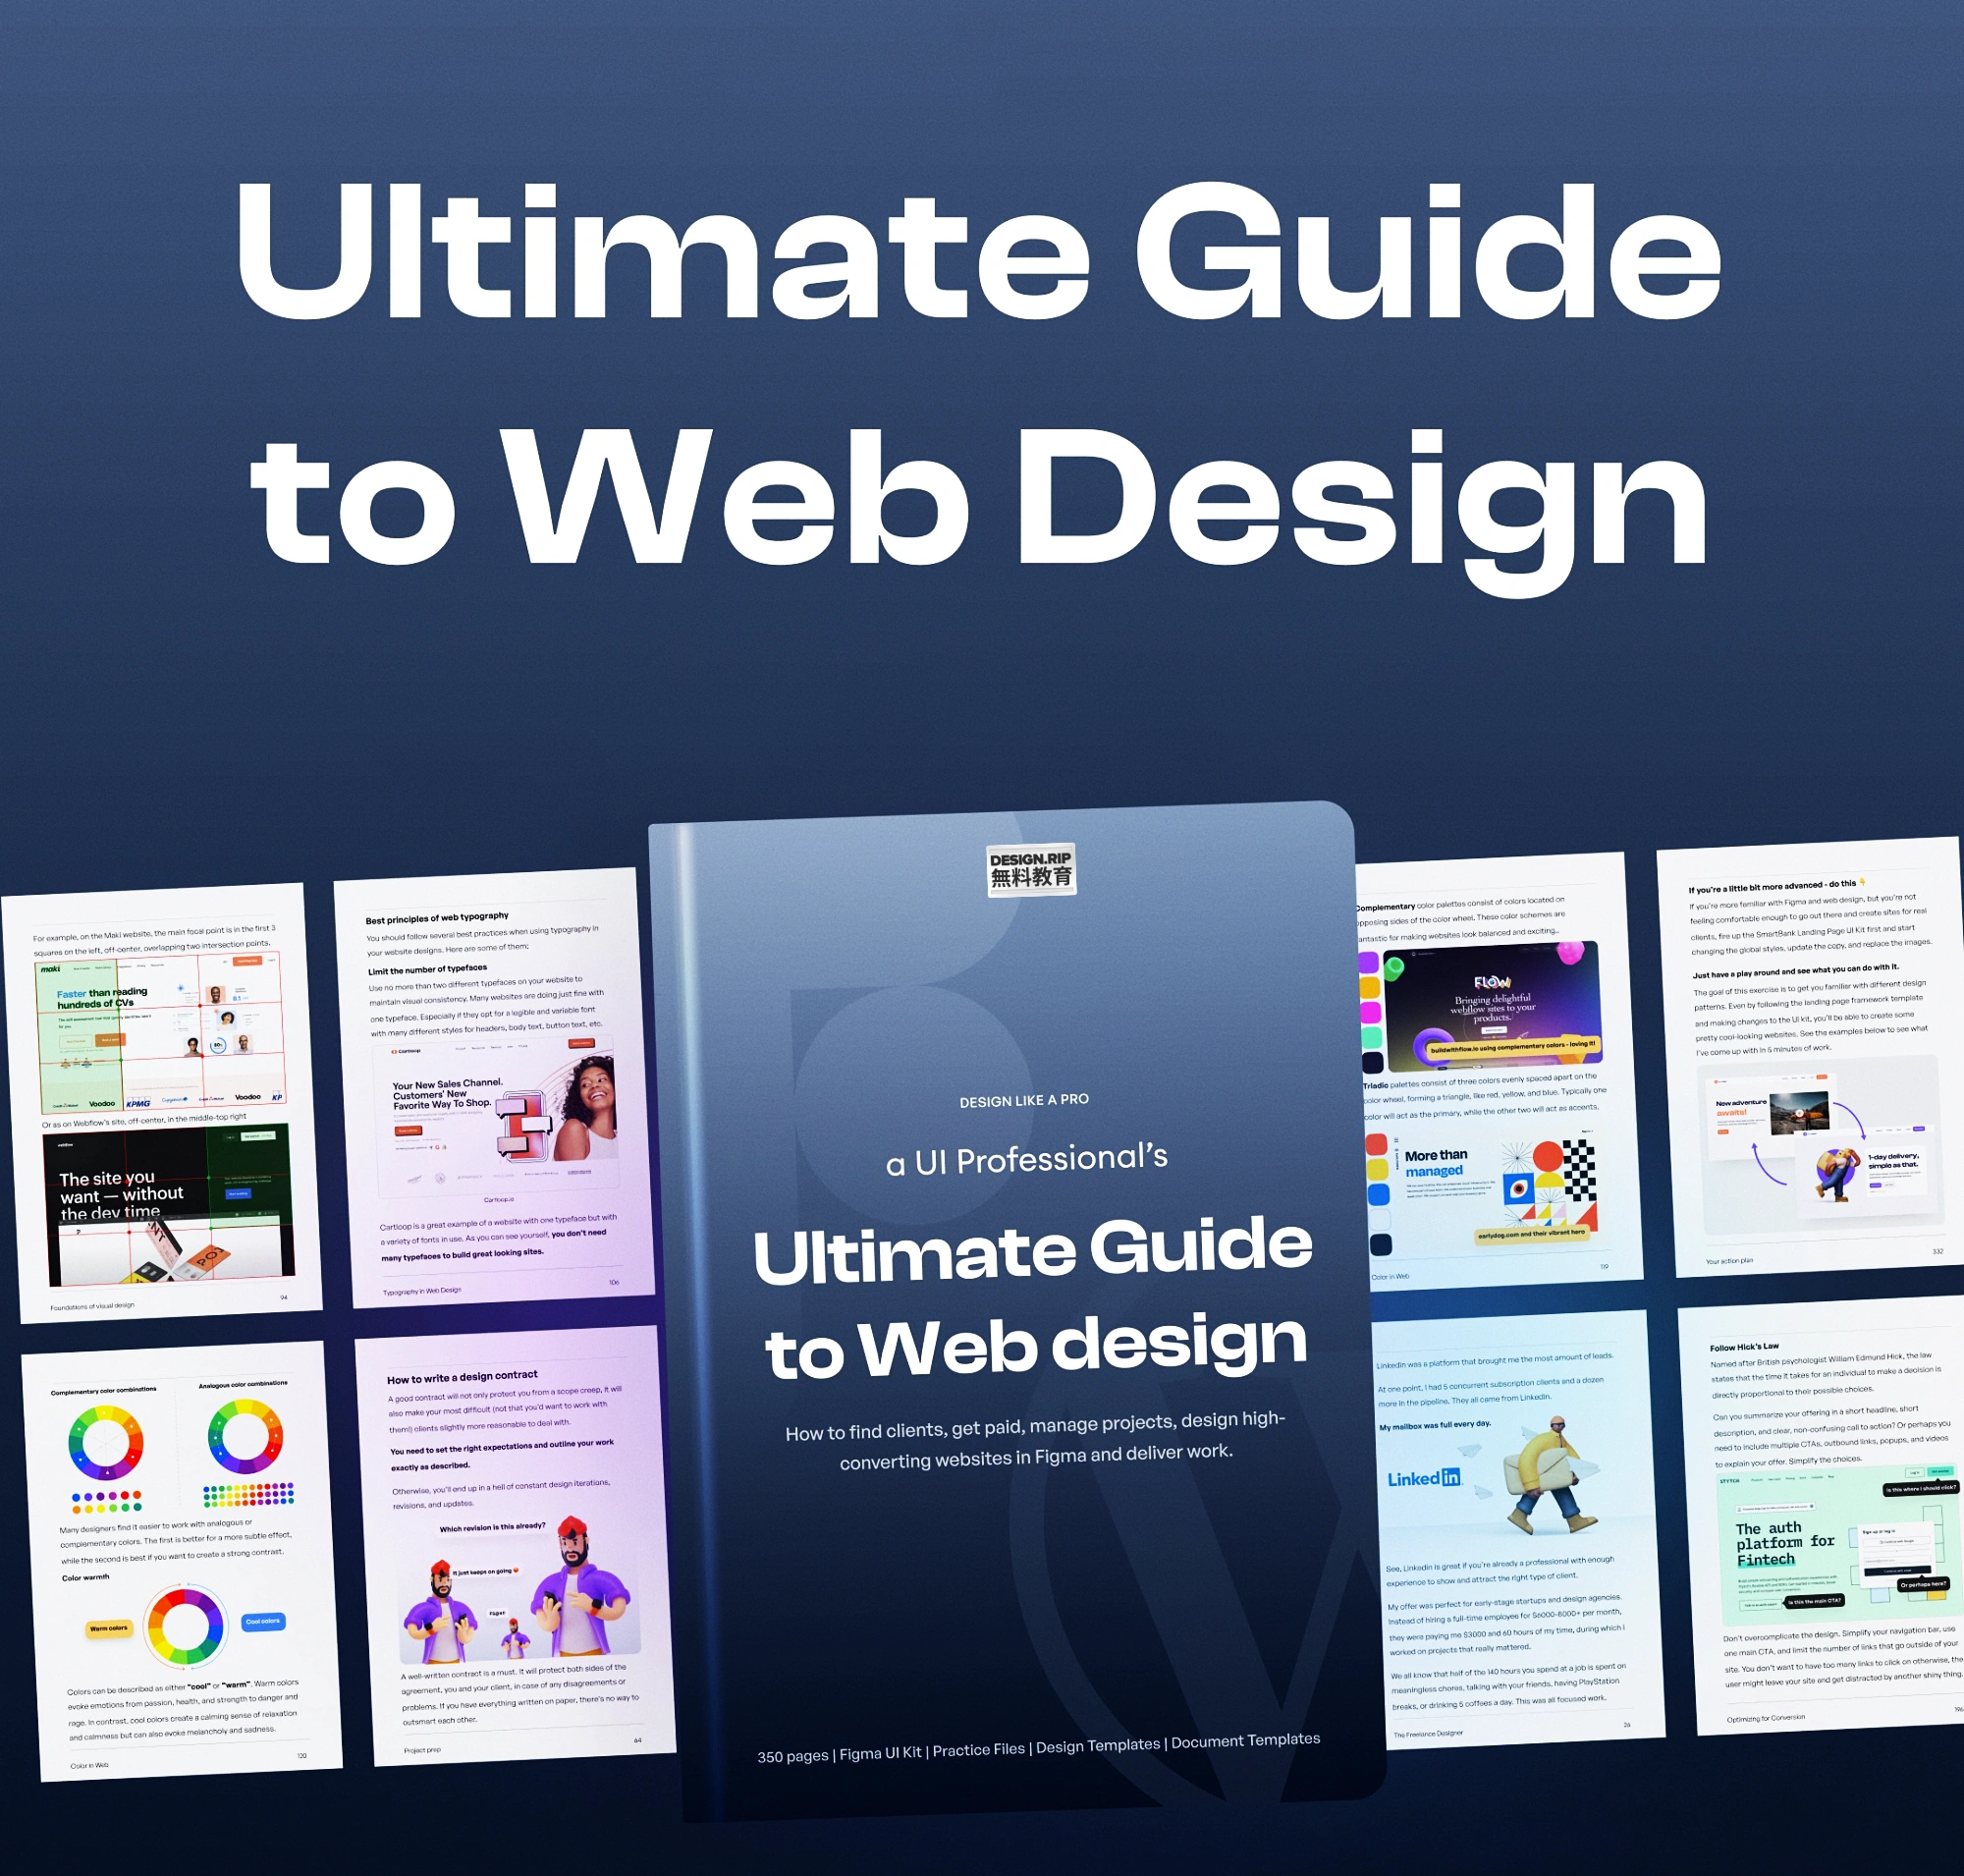 [VIP] The Ultimate Guide to Web Design (Landing Page UI Kit + Free Bonuses)